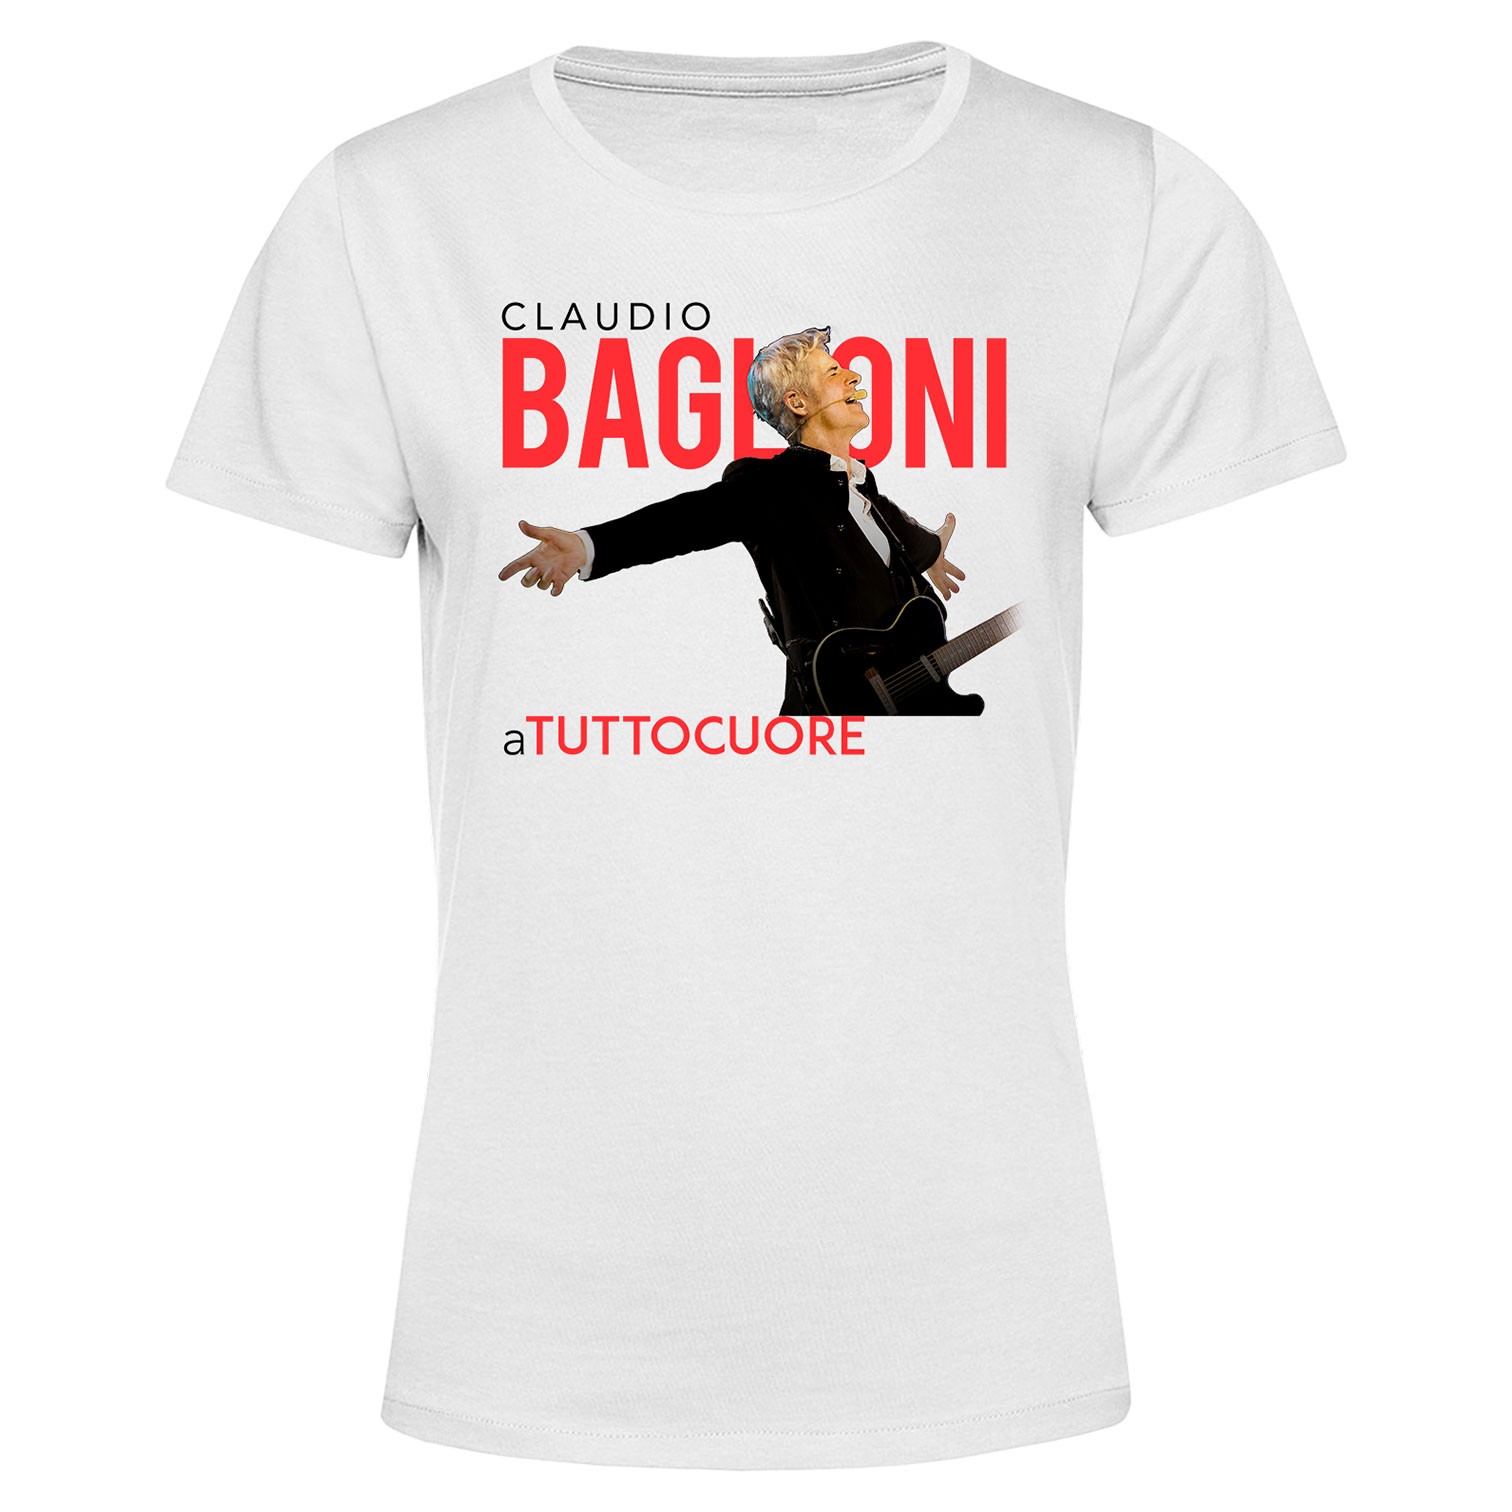 BAGLIONI T-shirt DONNA aTUTTOCUORE Locandina - Bianca